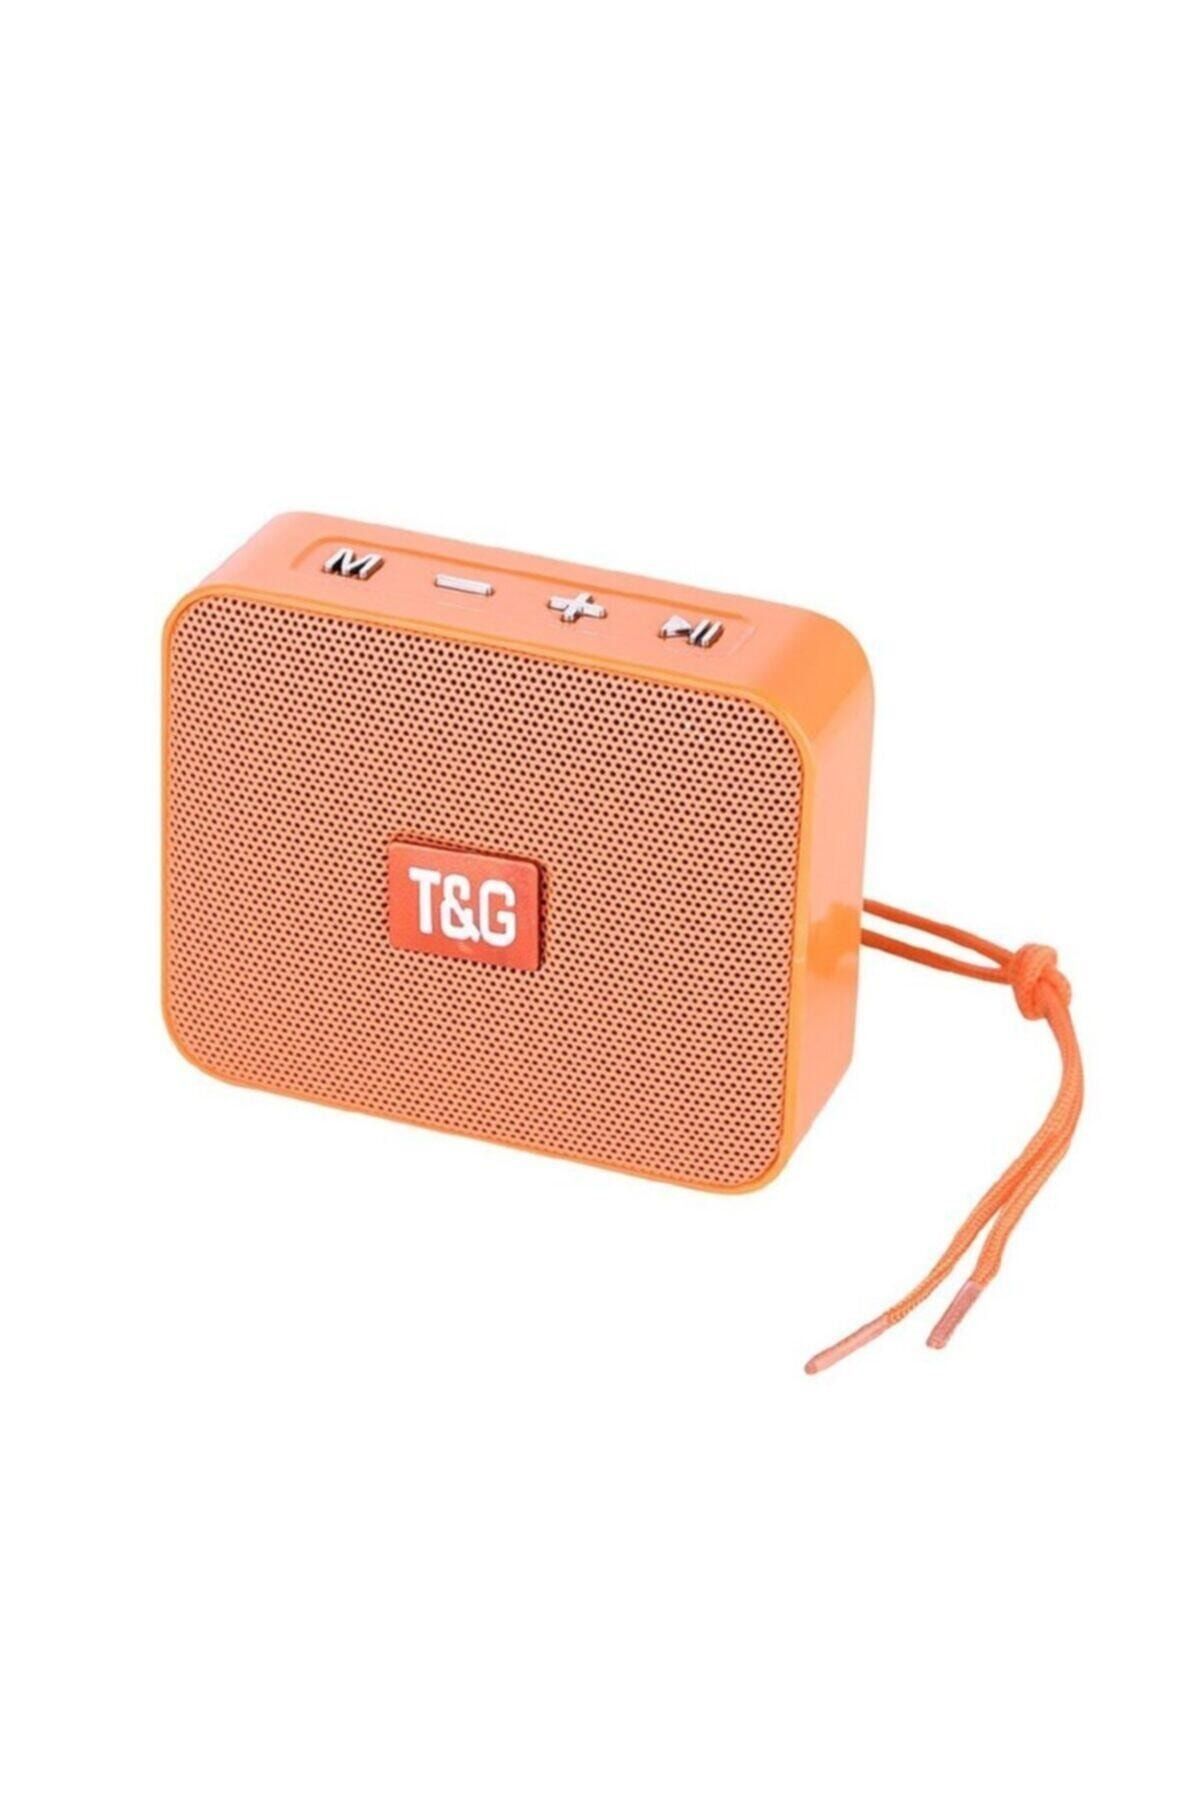 T G Tg-166 Kablosuz Hoparlör Ses Bombası Bluetooth Kablosuz Hoparlör Radyo / Usb / Hafıza Kartı